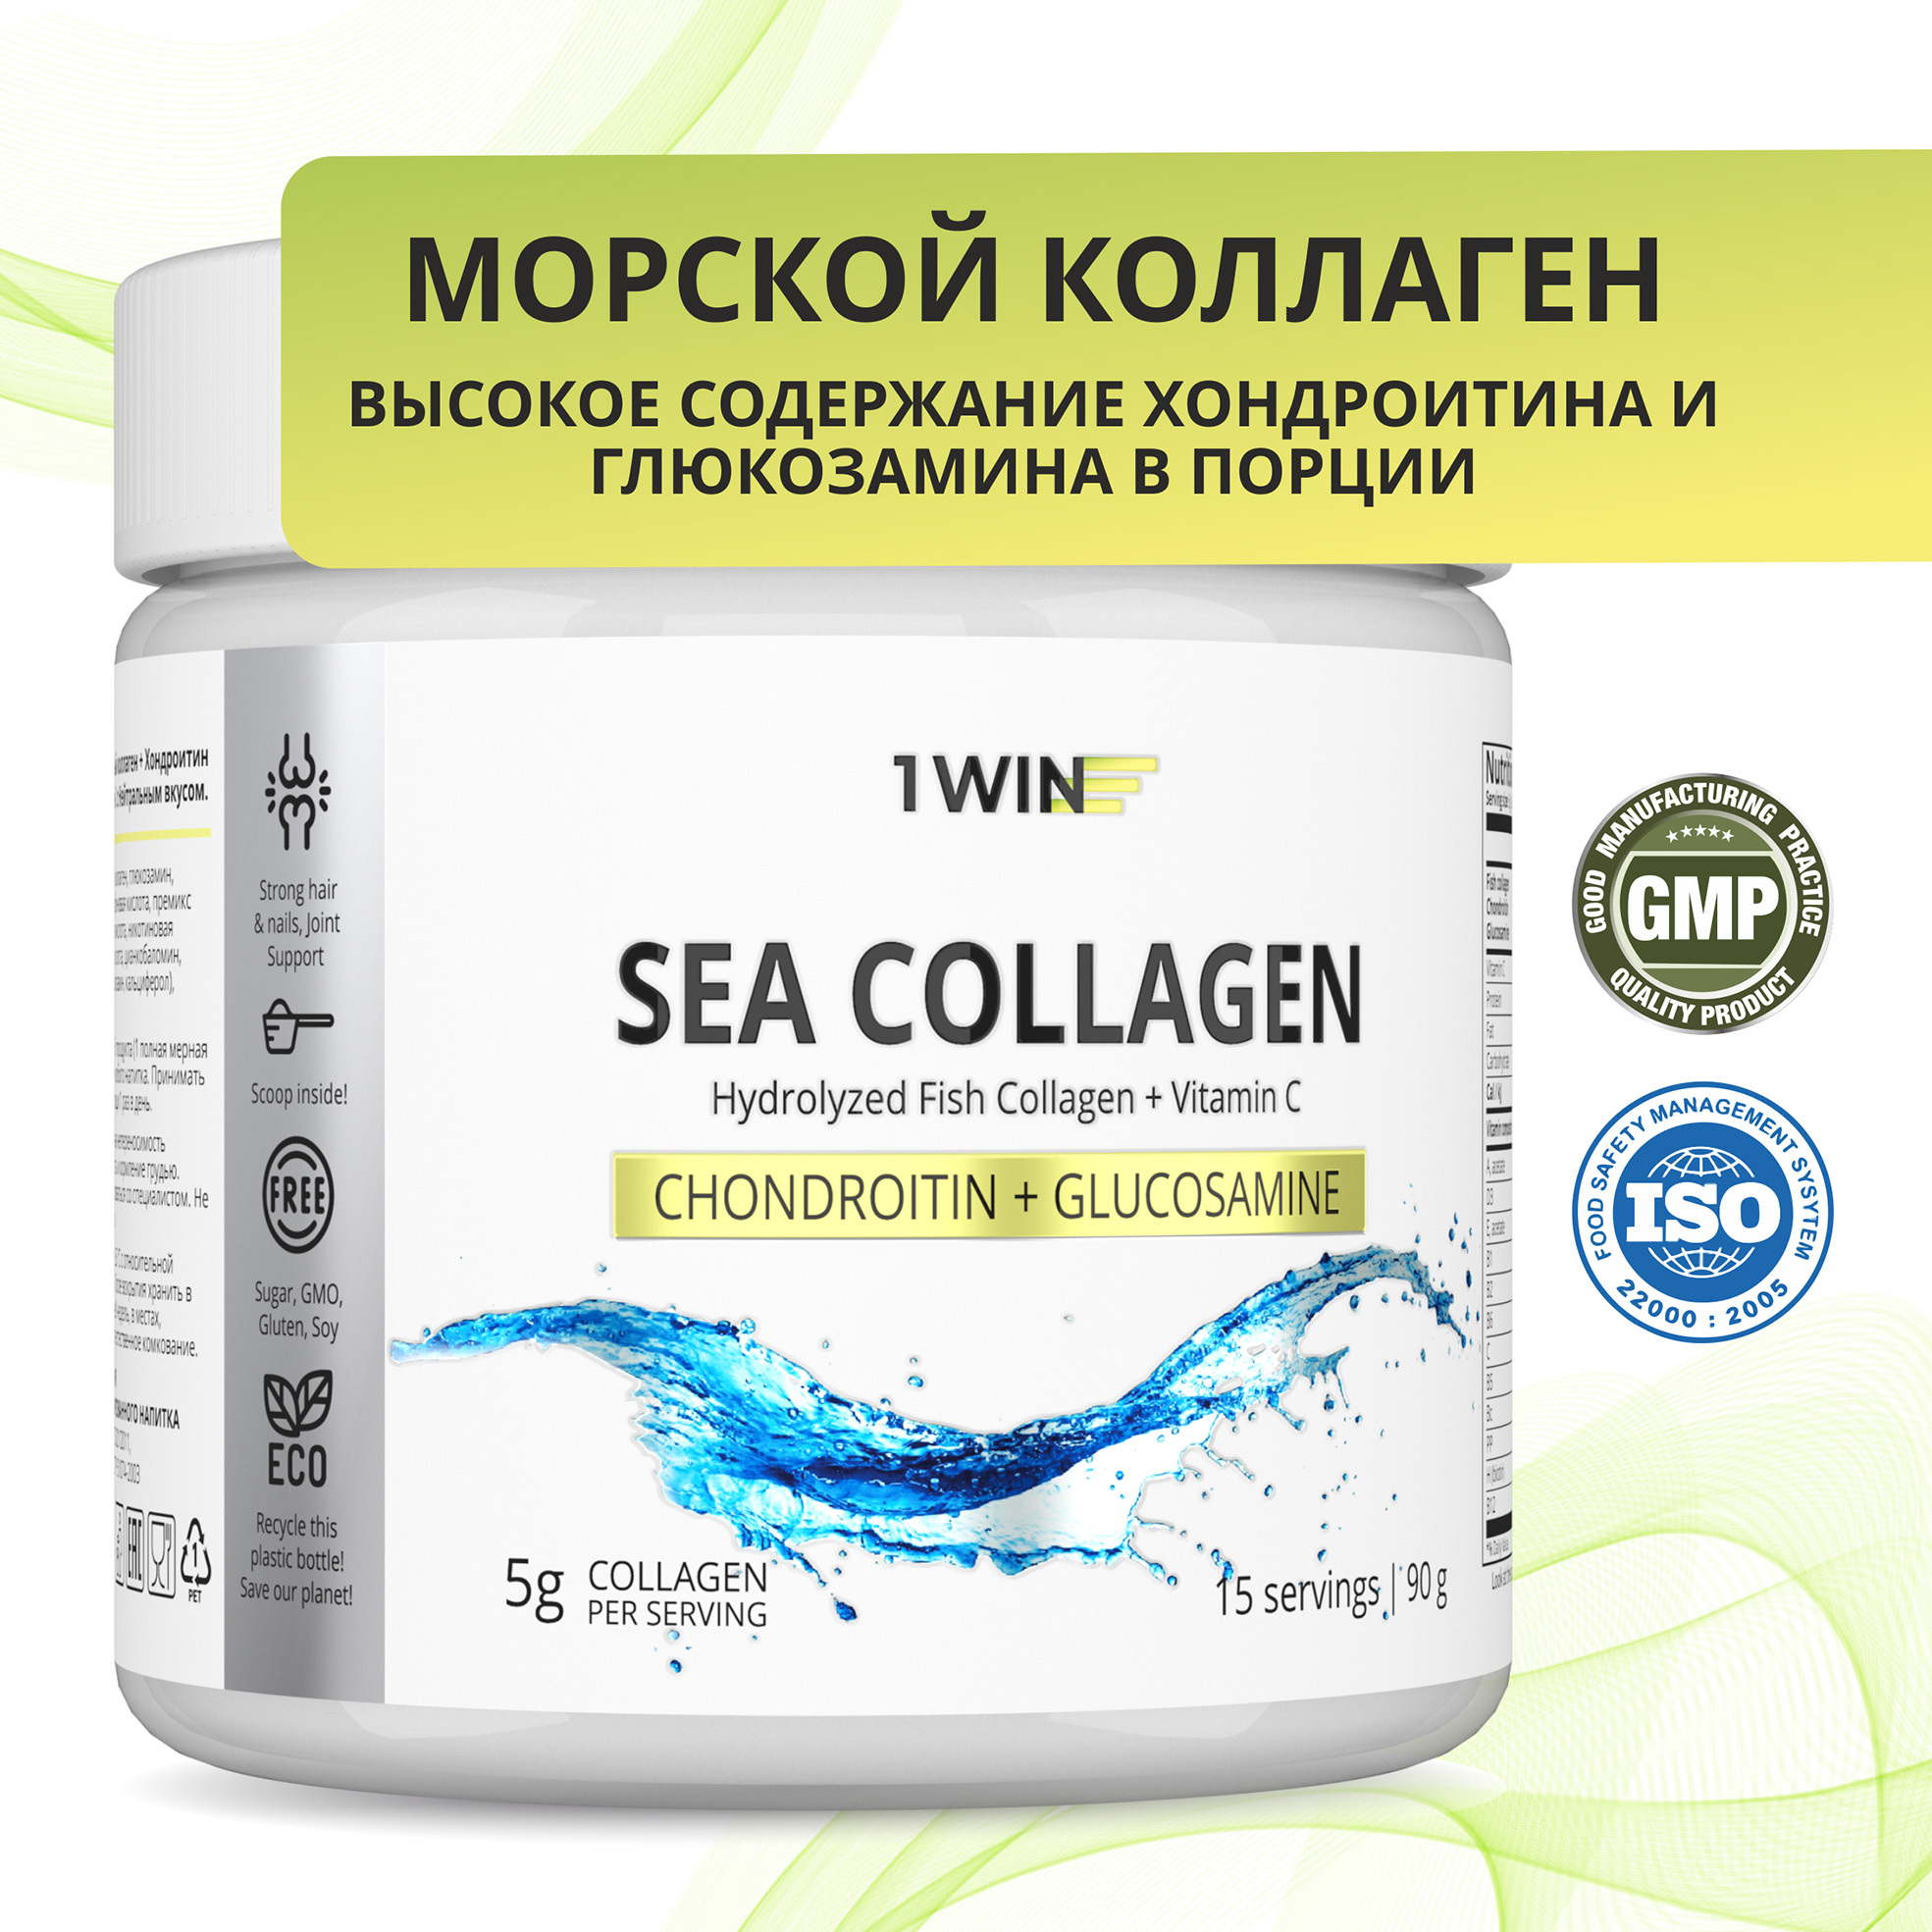 Коллаген рыбный с витамином с. 1win Collagen + Glucosamine + Chondroitin порошок. Коллаген в порошке рыбий. Морской коллаген. Морской (рыбный) коллаген.